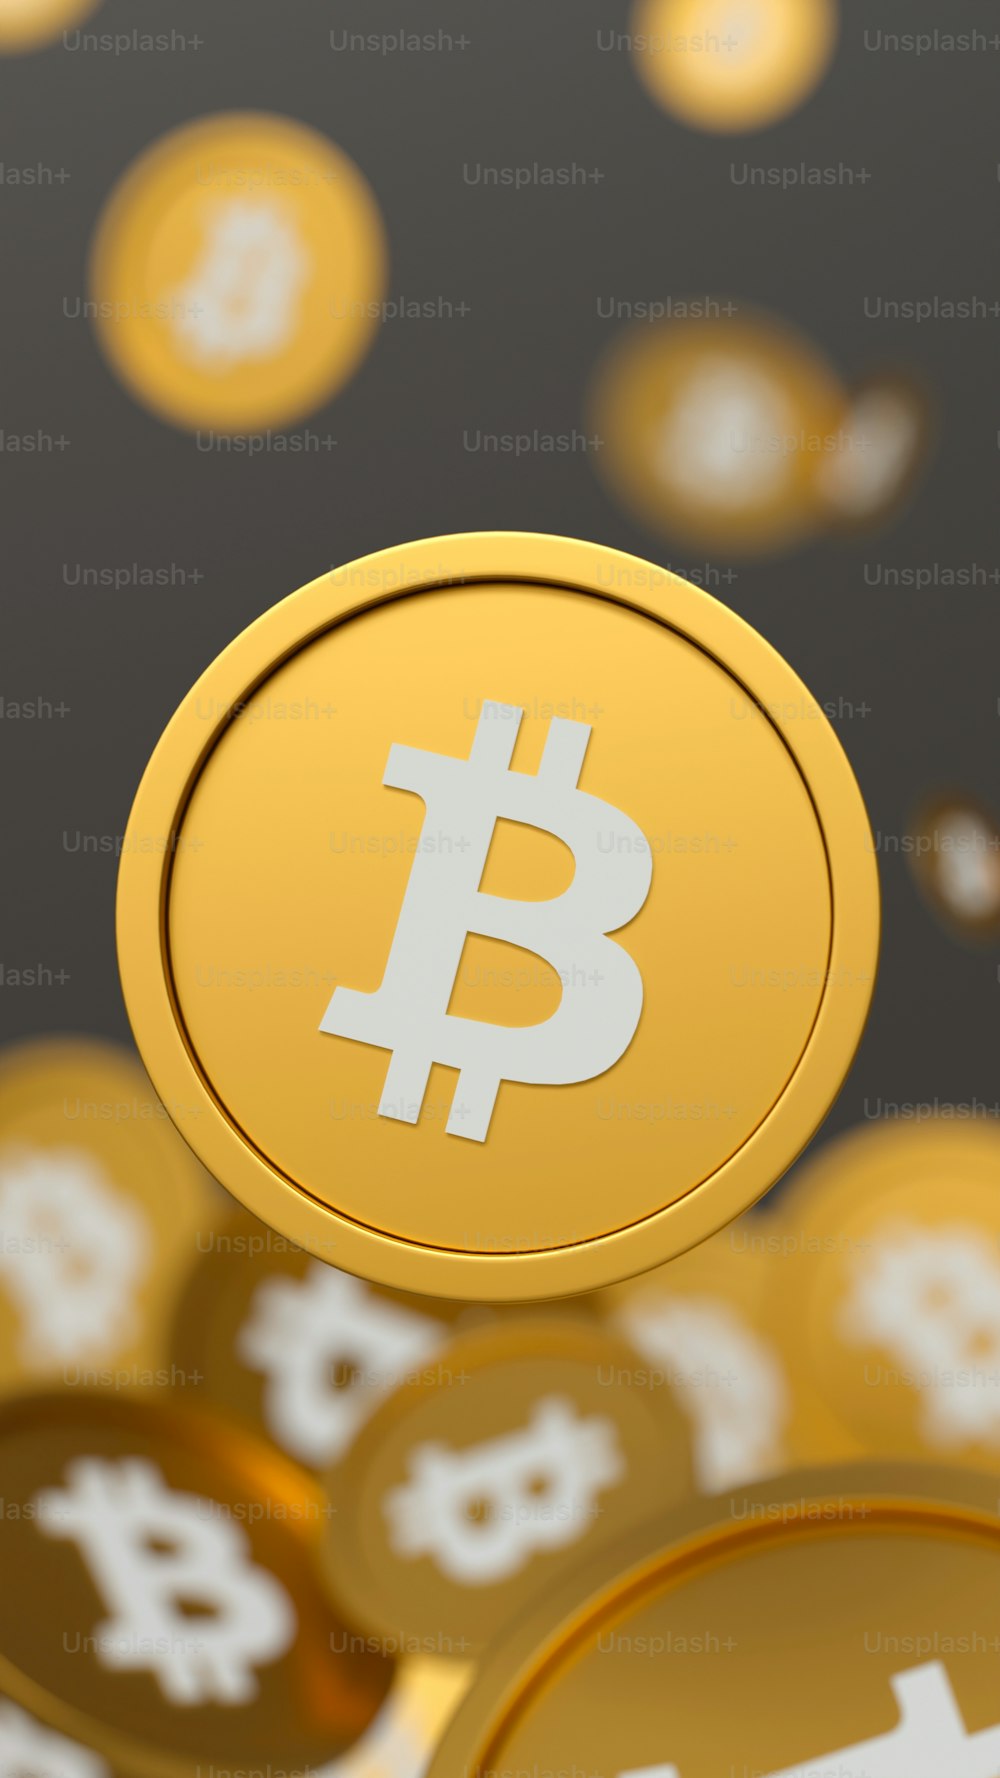 a pile of golden bitcoin coins with a bitcoin symbol on top